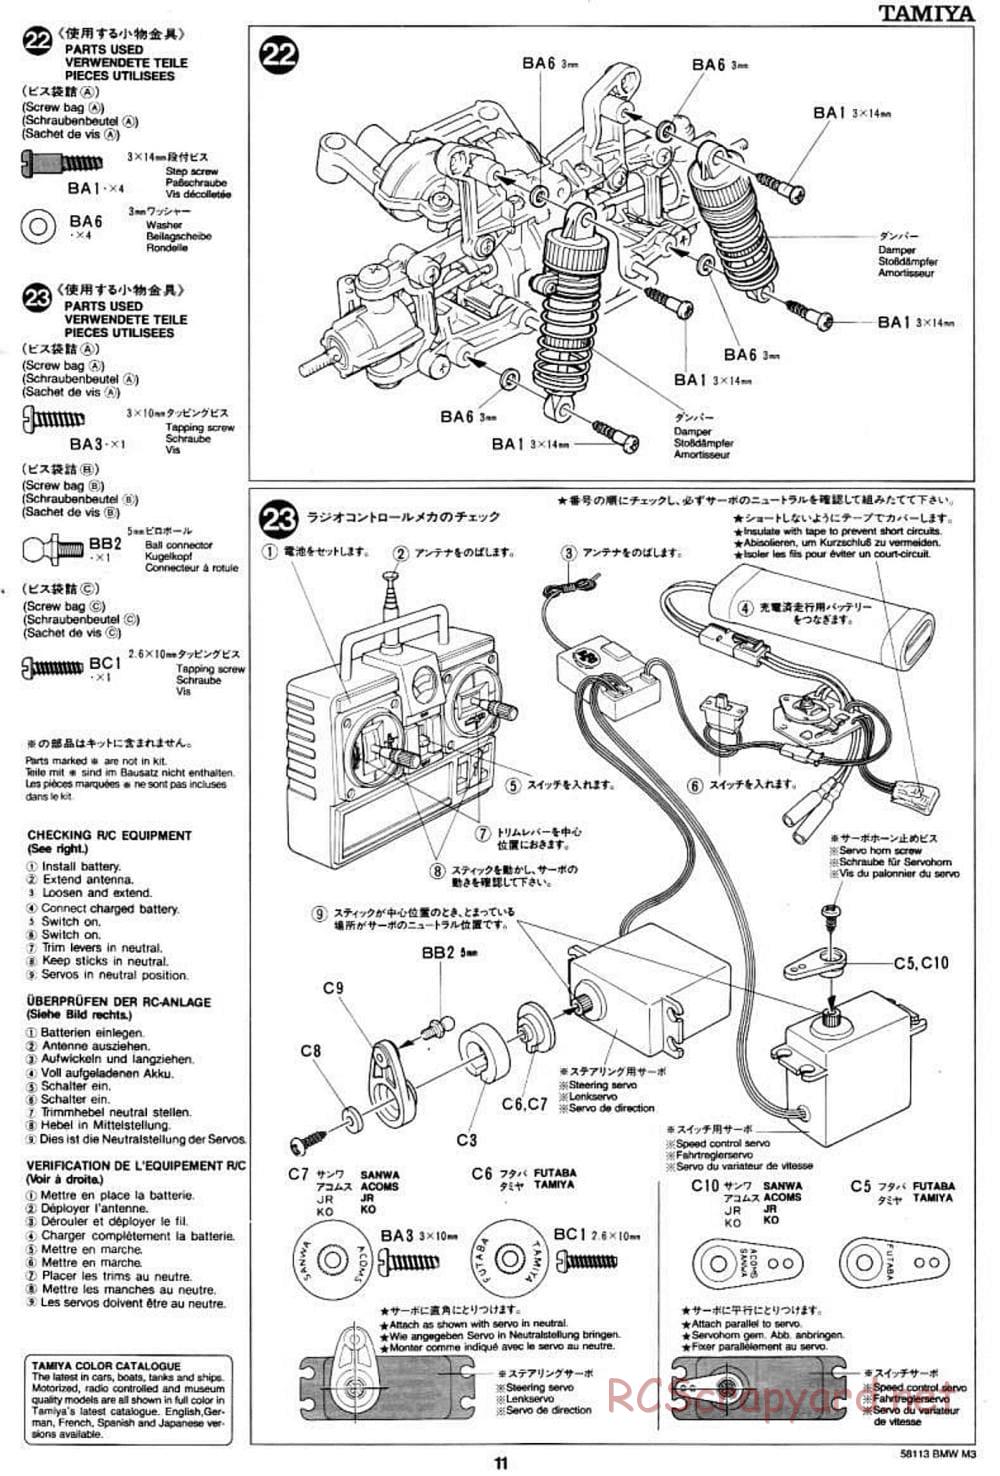 Tamiya - Schnitzer BMW M3 Sport Evo - TA-01 Chassis - Manual - Page 11